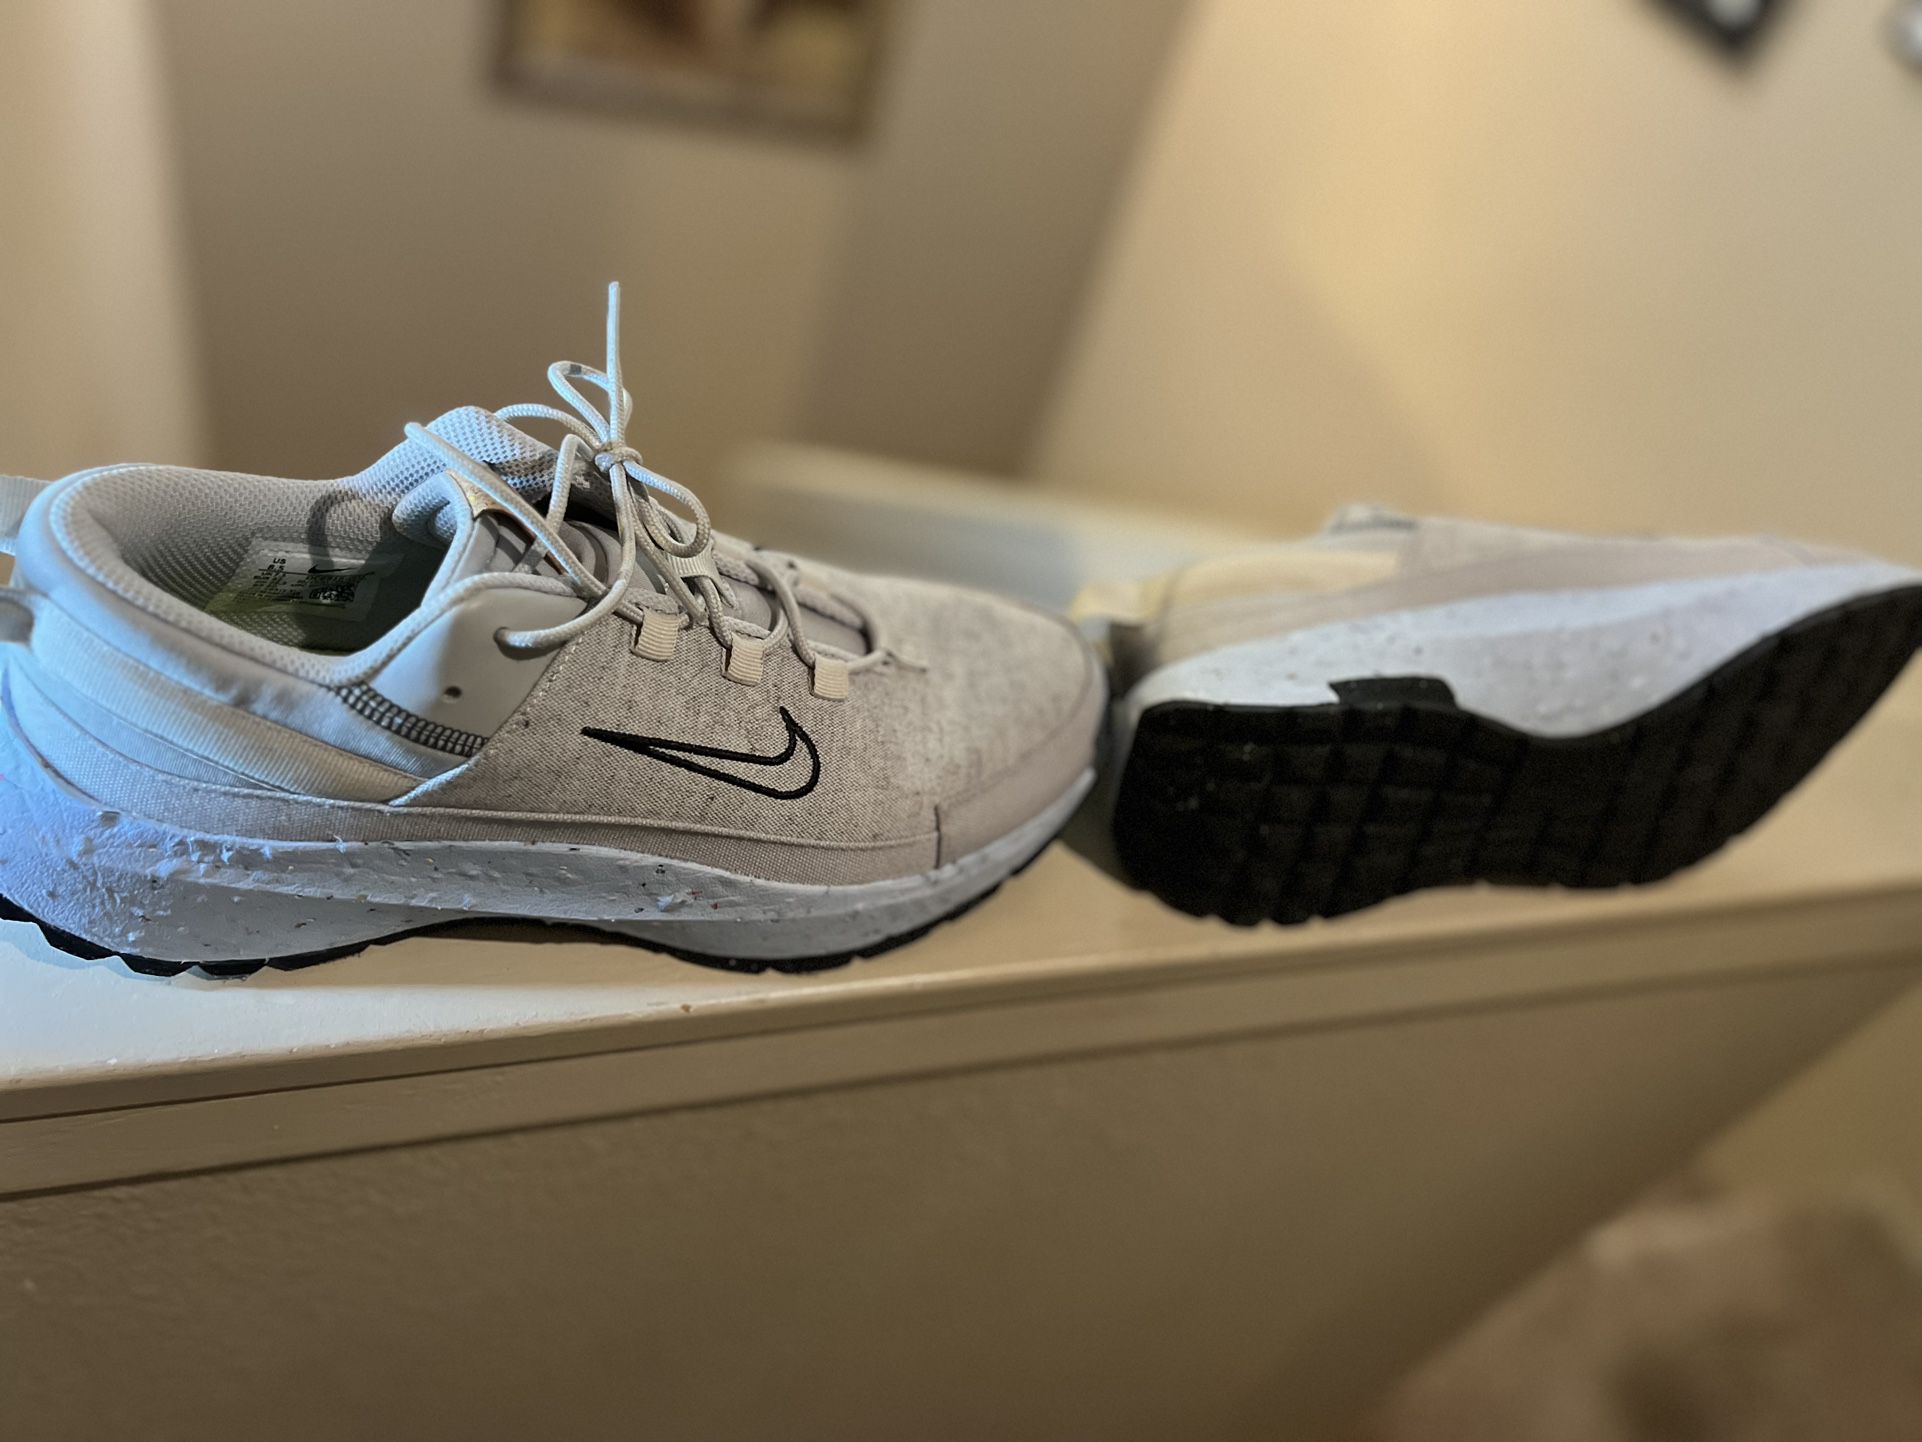 Men’s Nike Shoes 8.5 